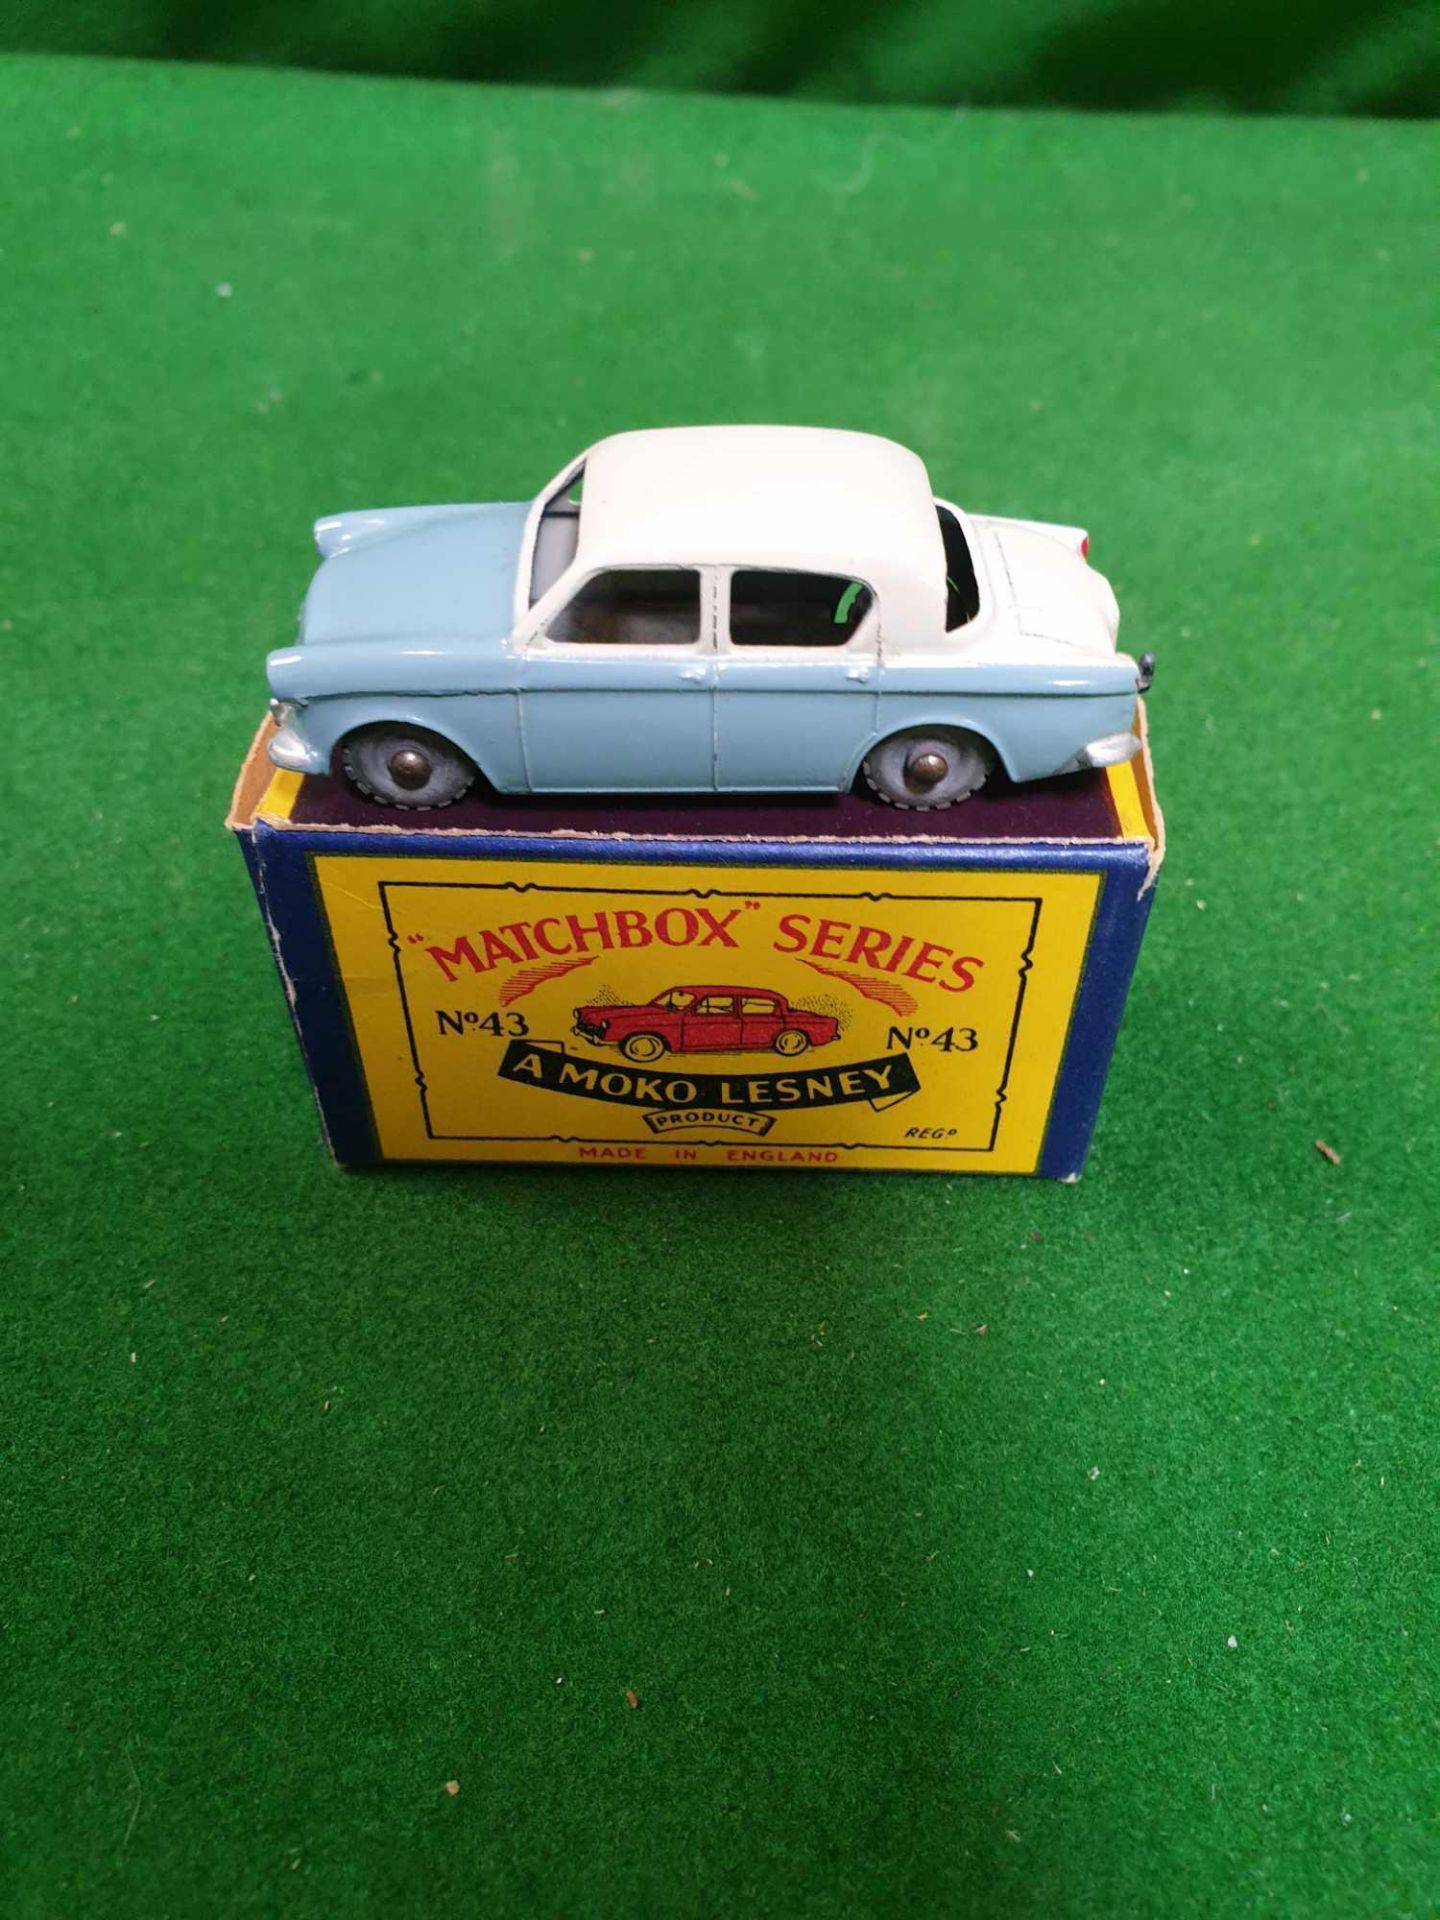 Matchbox Moko Lesney #43a Hillman Minx Two Tone Blue With Cream Roof Mint Model Firm Box 1959-1960